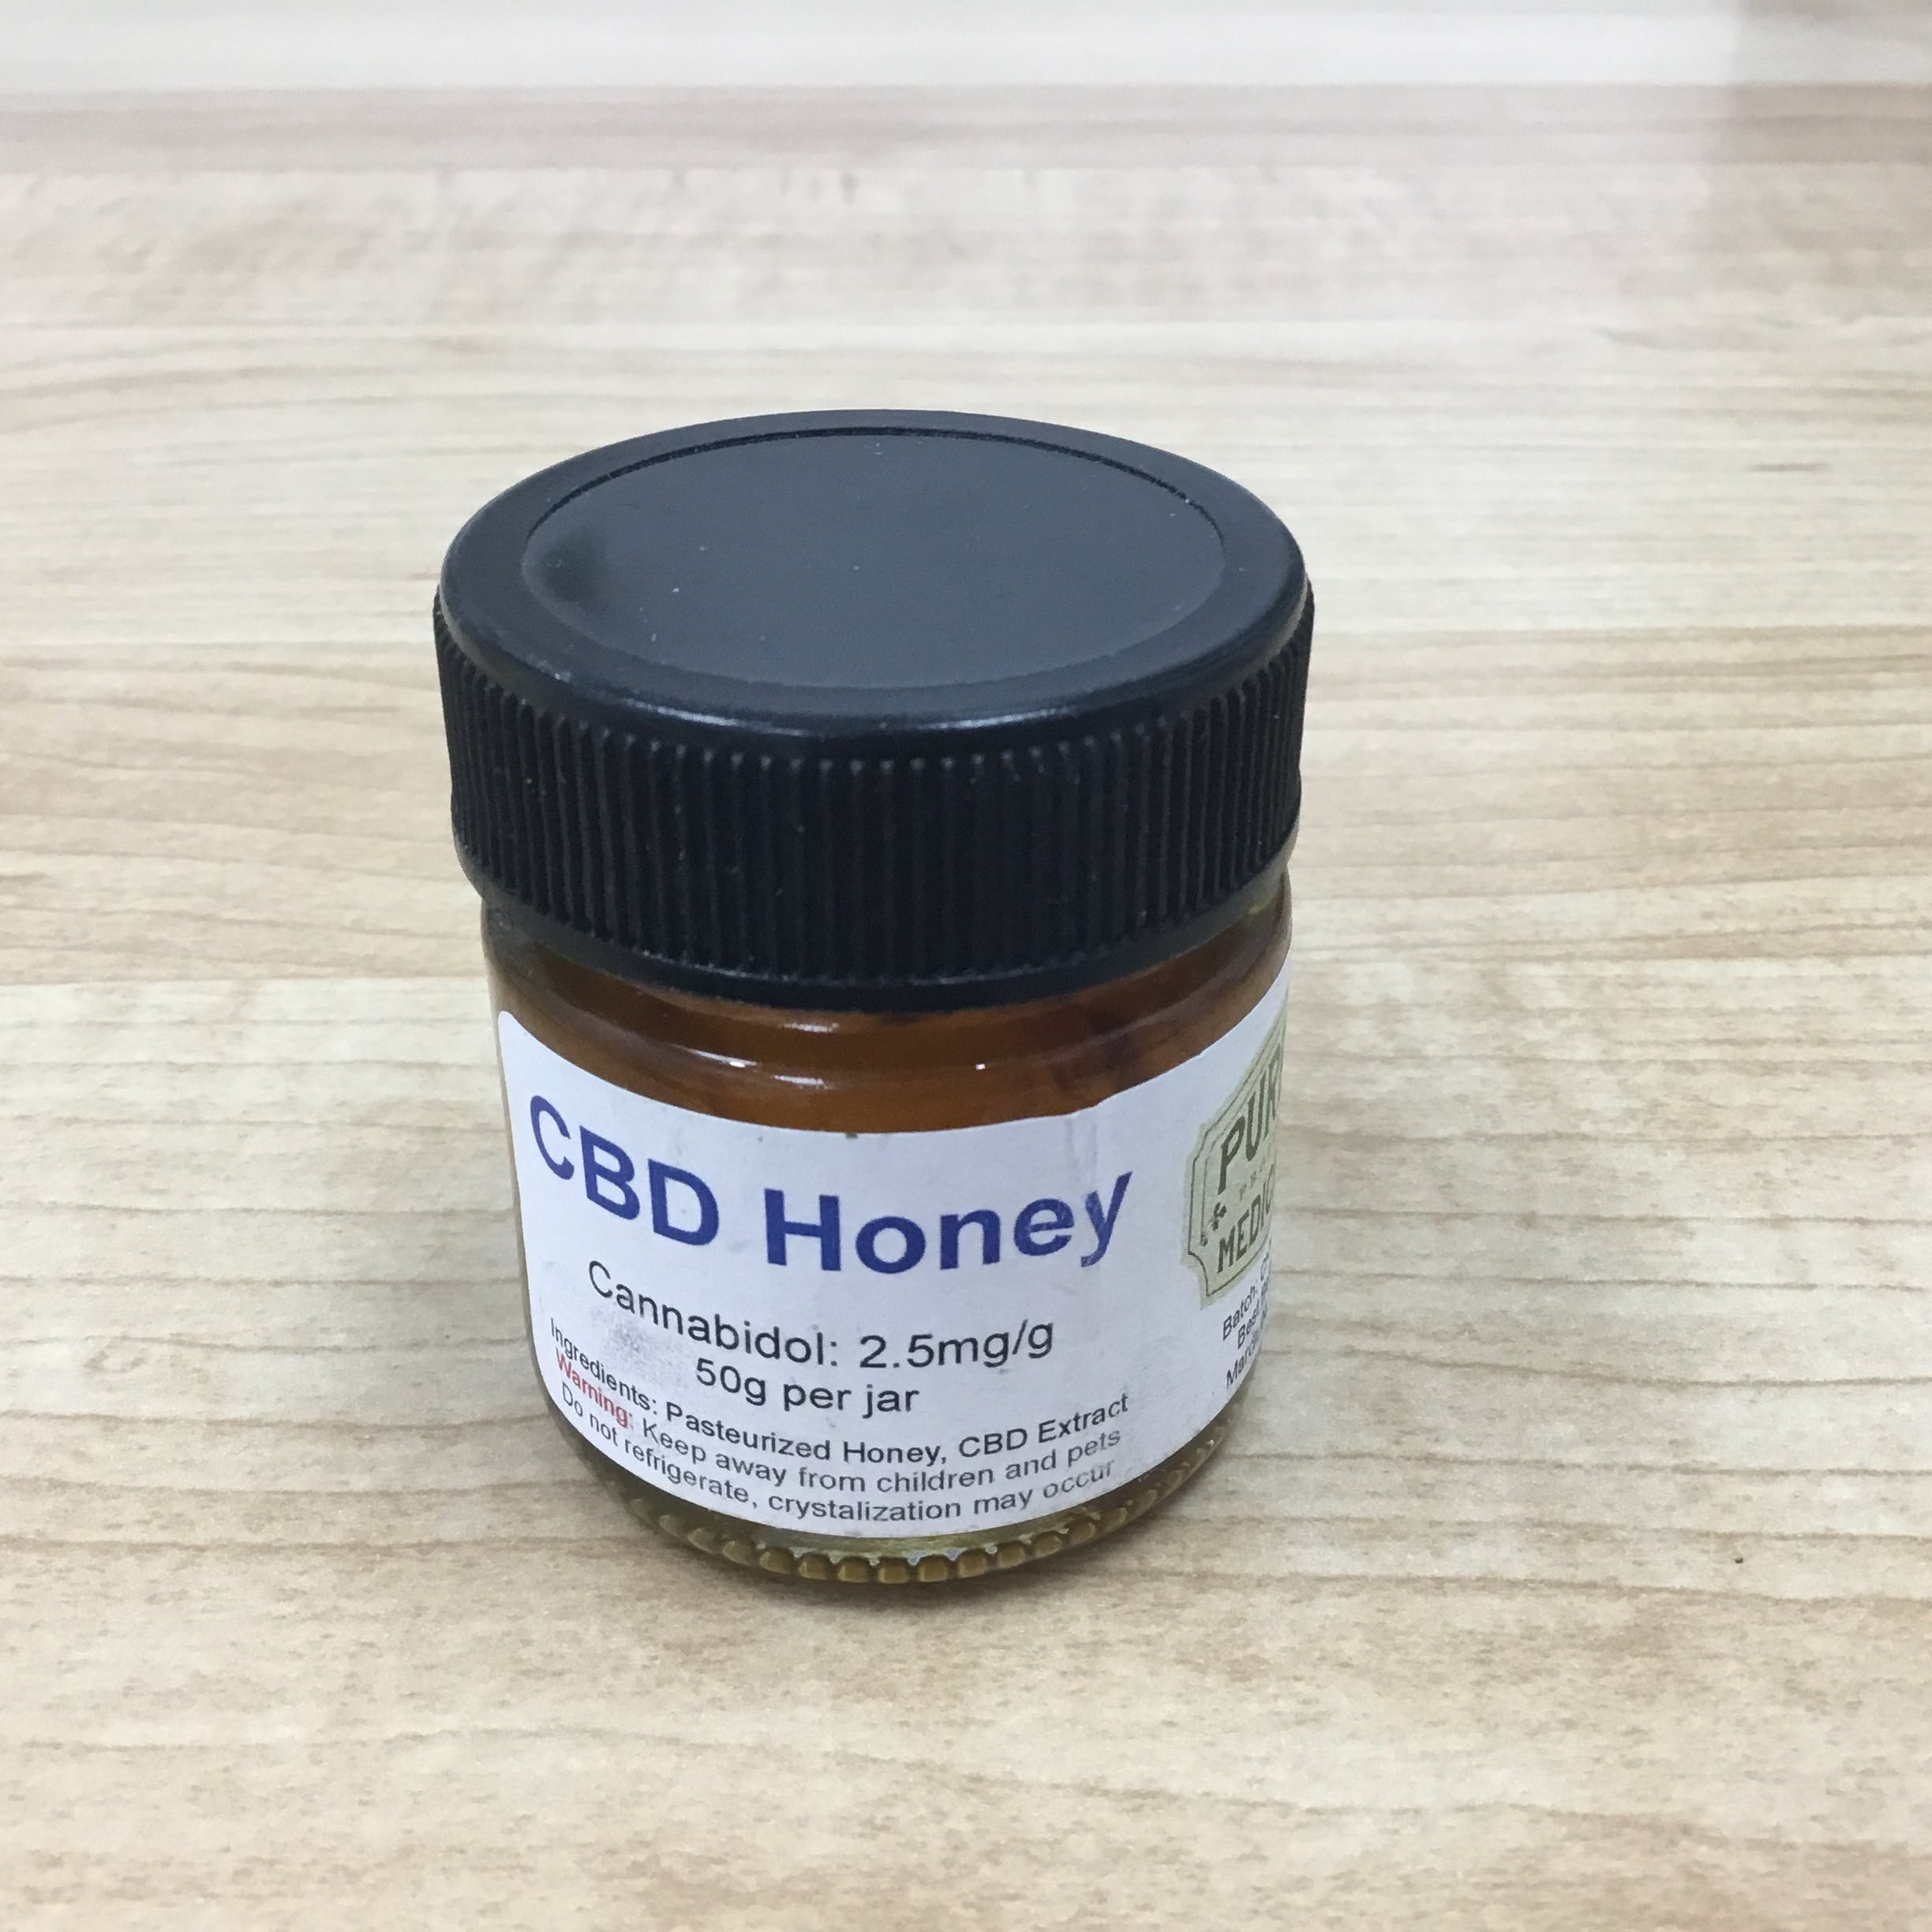 Purely Medical CBD Honey